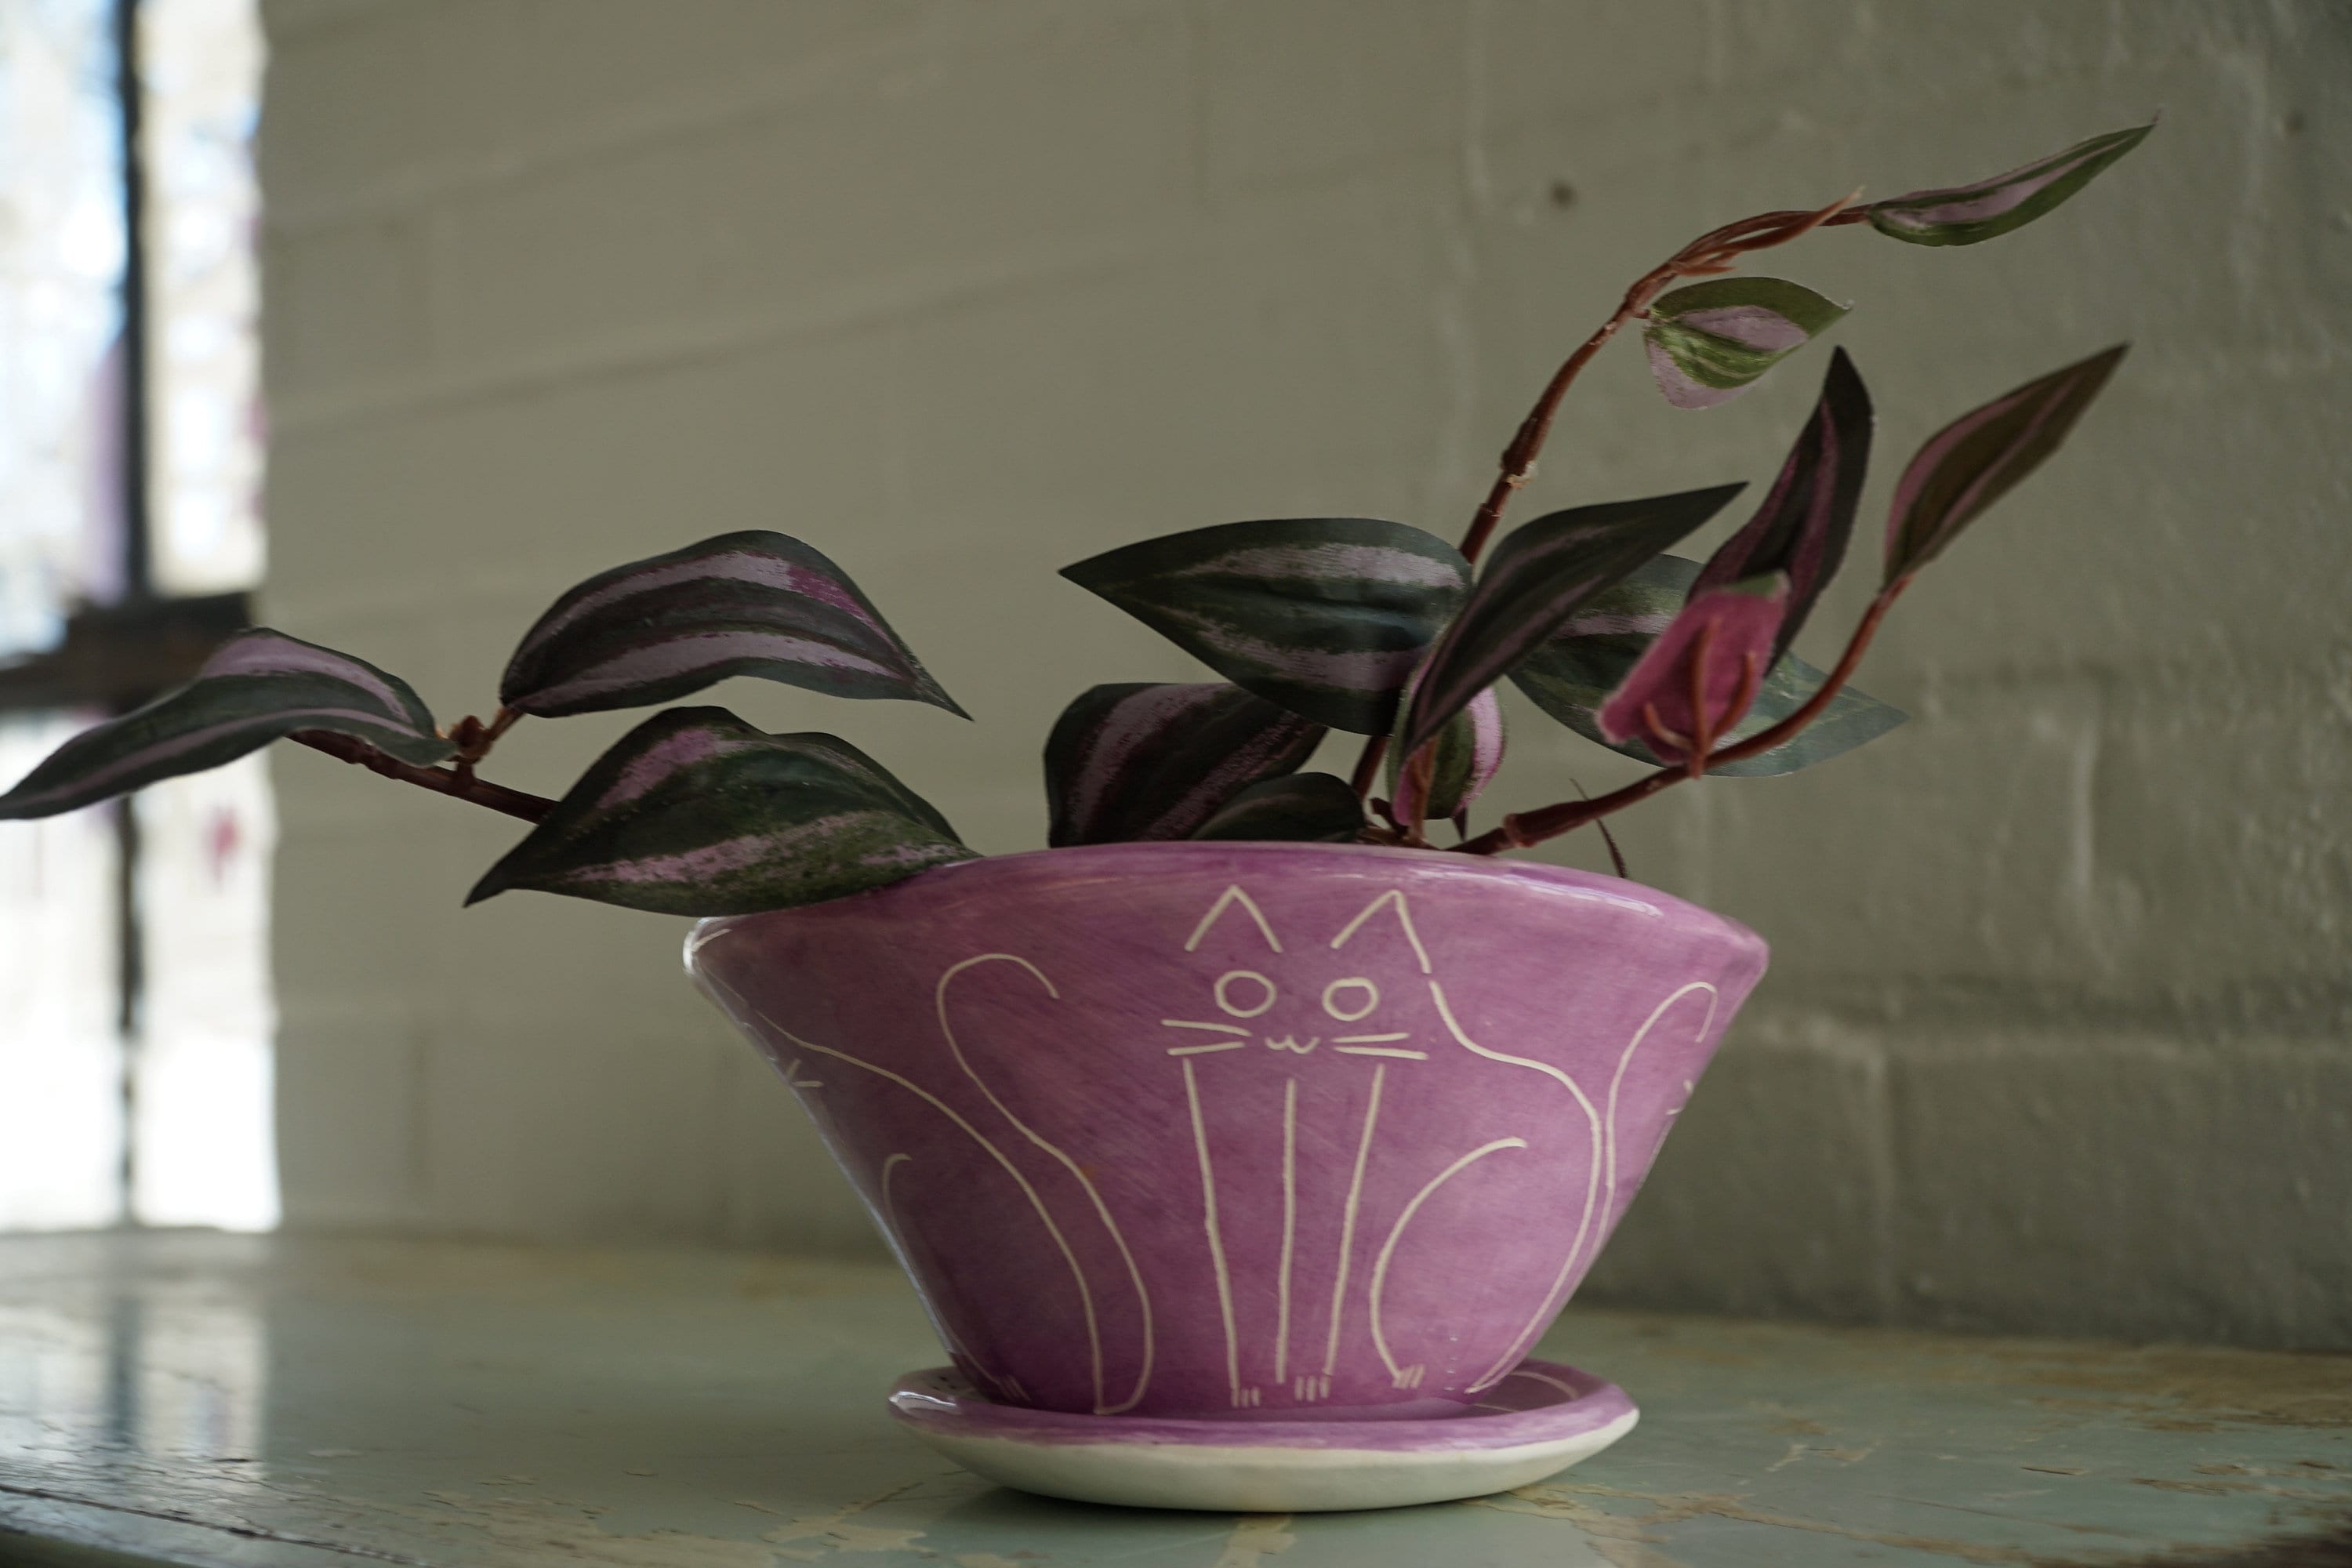 Purple & White Glazed Table Planter w/ "Kitty" Design - Matching Tray - Succulent Planter - Small Plant Pot - Propagating Planter - Housewarming